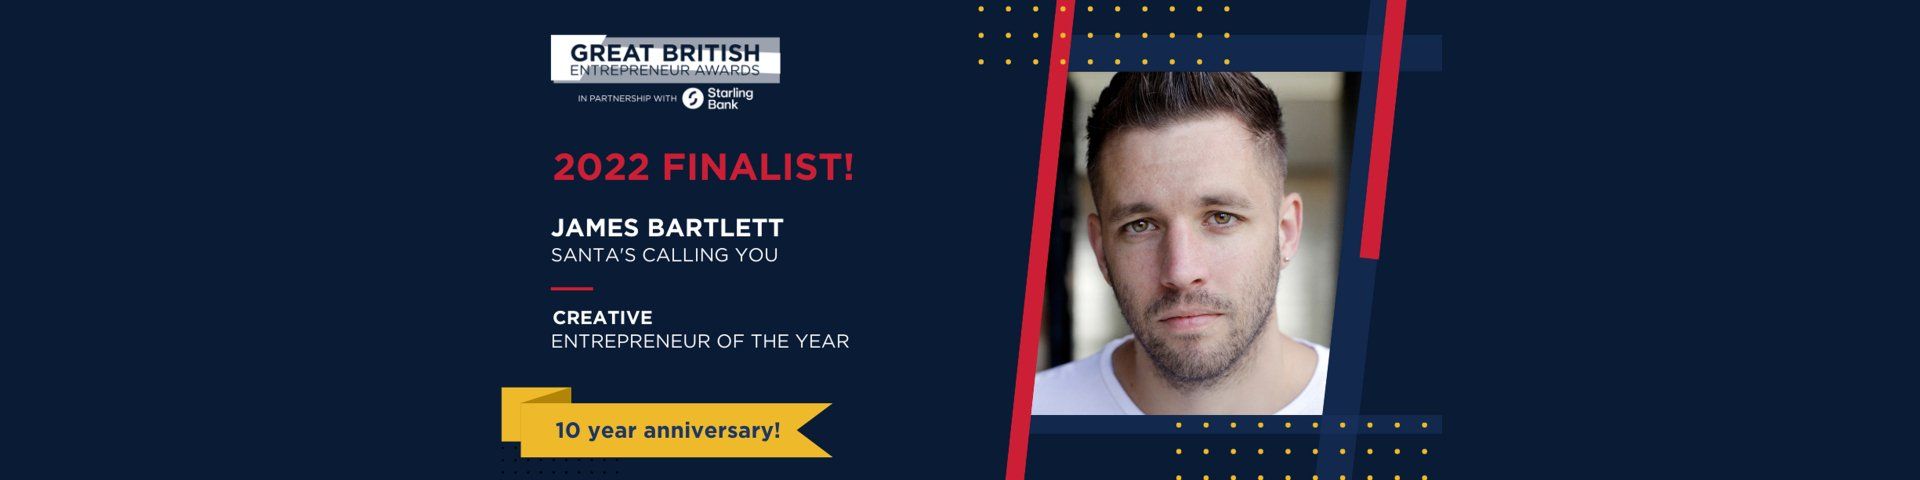 Great British Entrepreneur Awards Finalist - James Bartlett